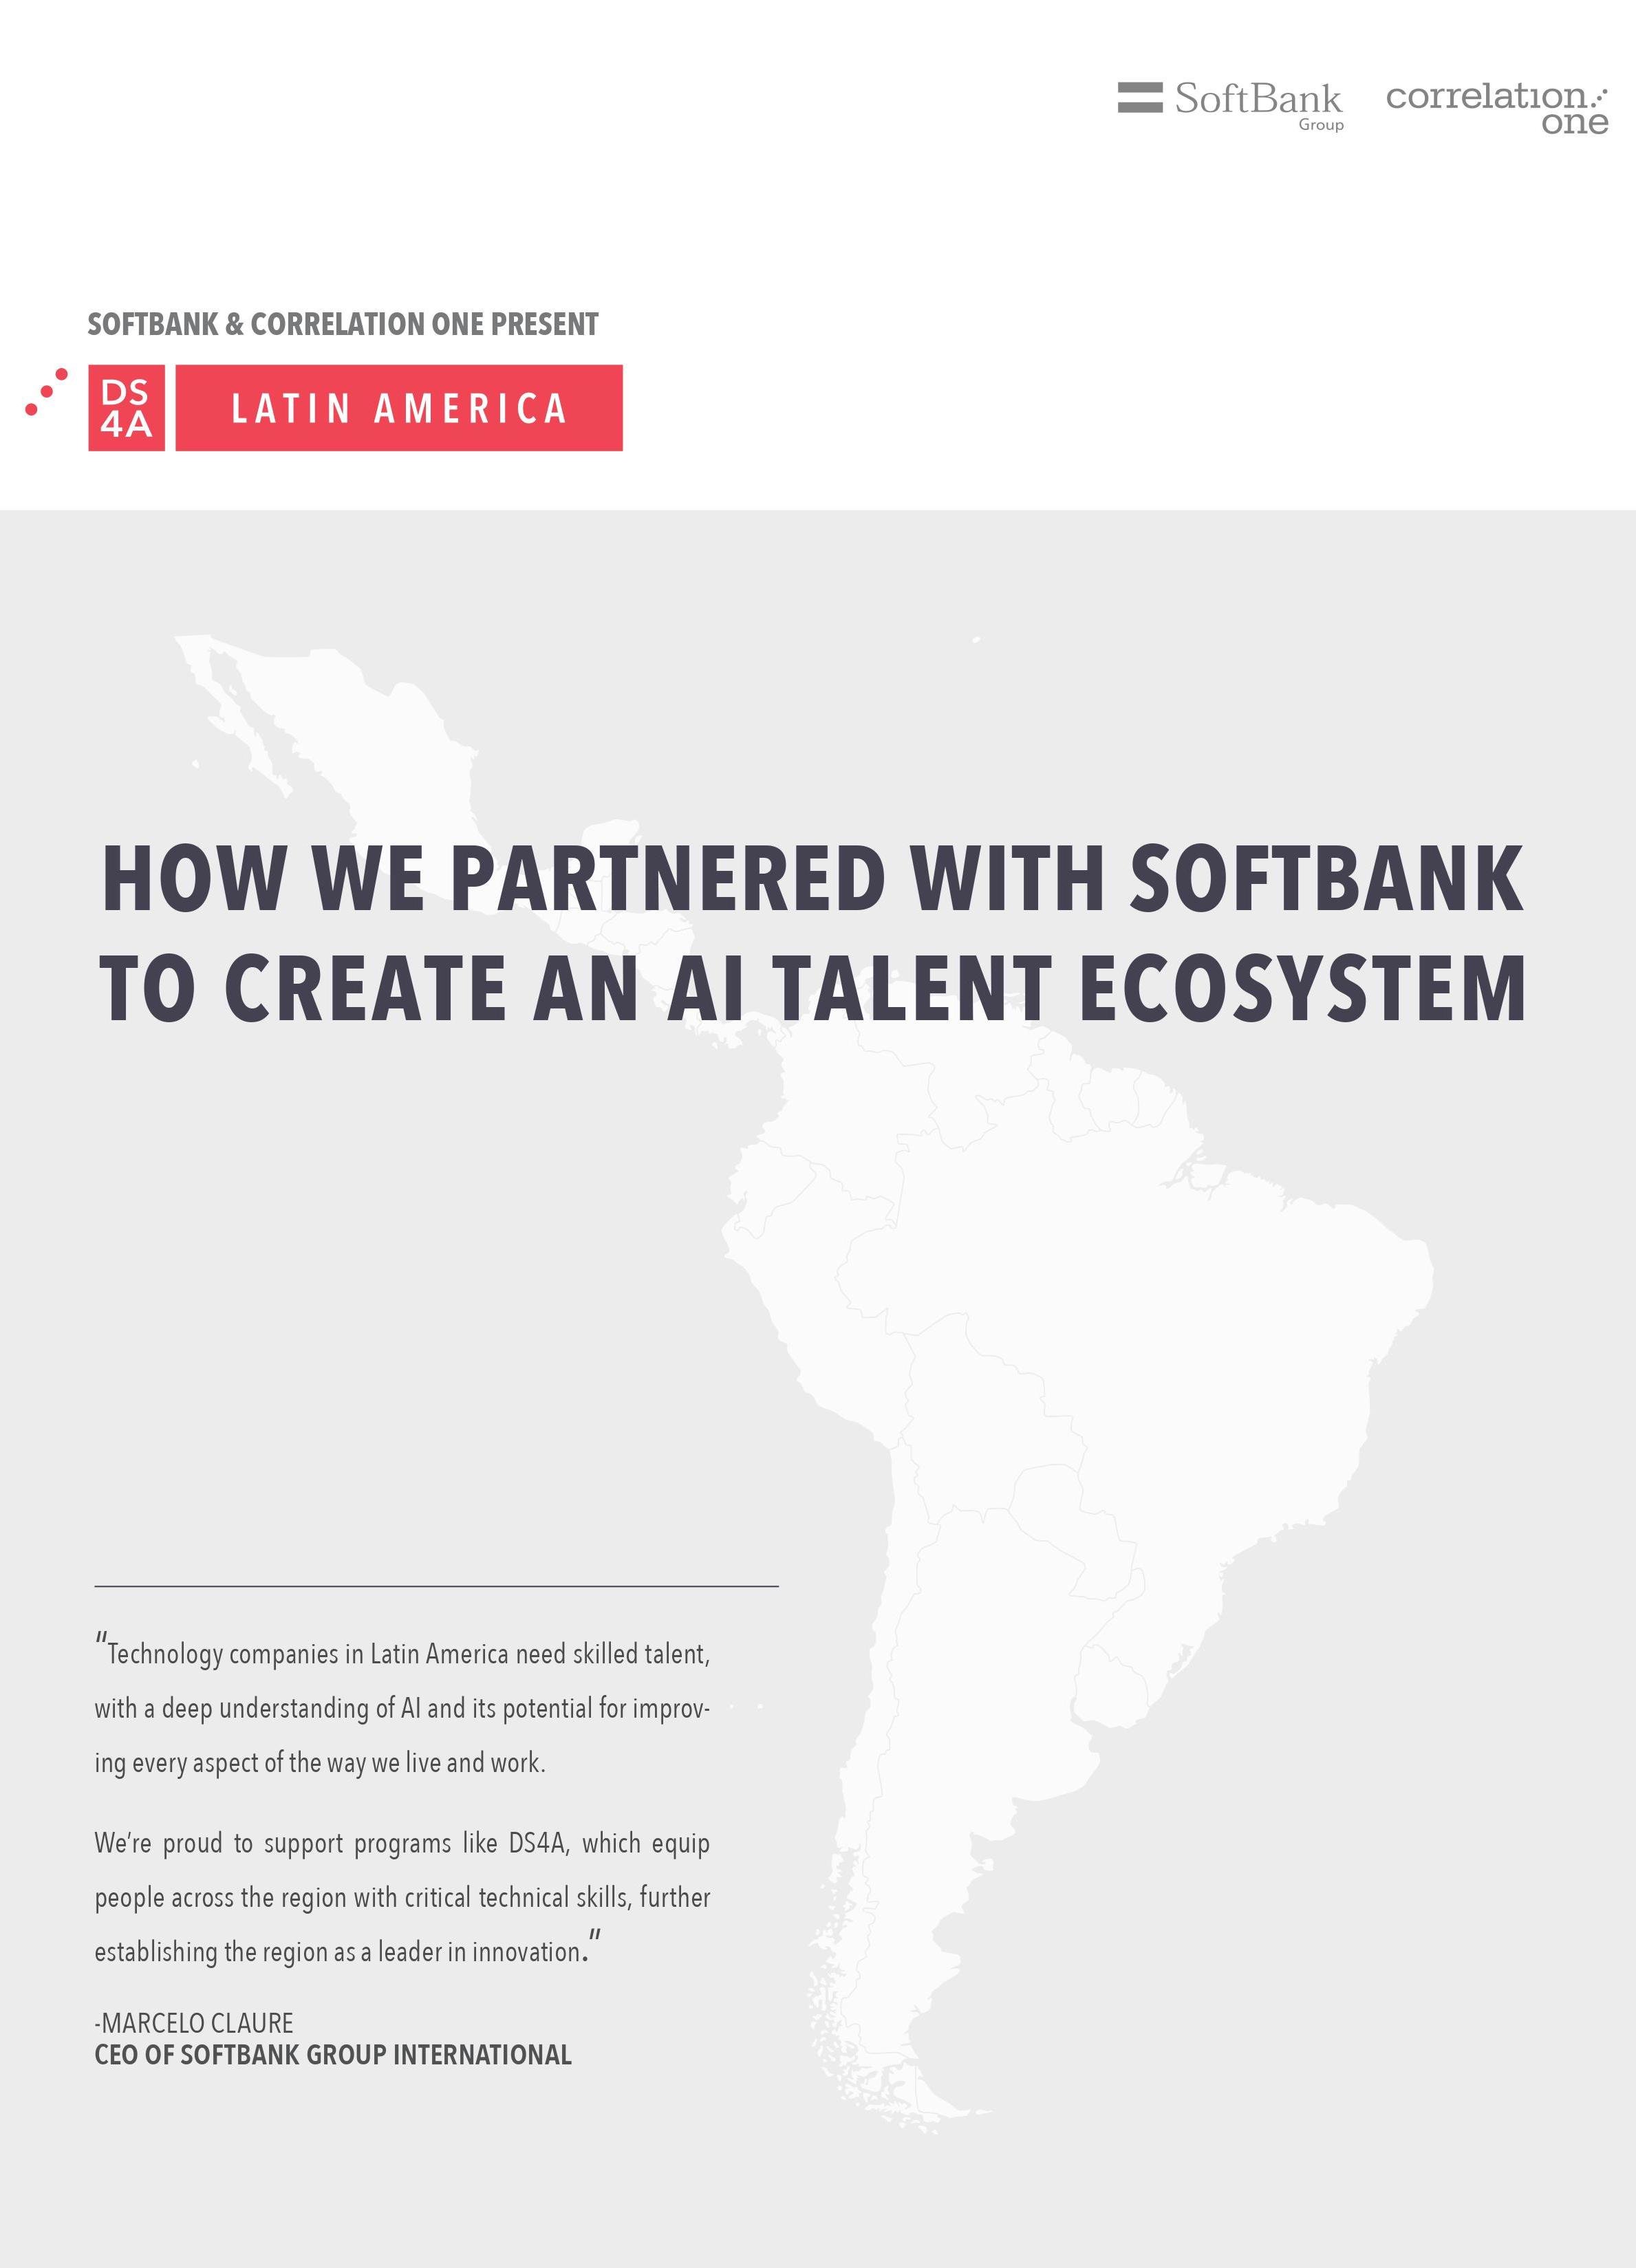 Data Science Training: Softbank case study